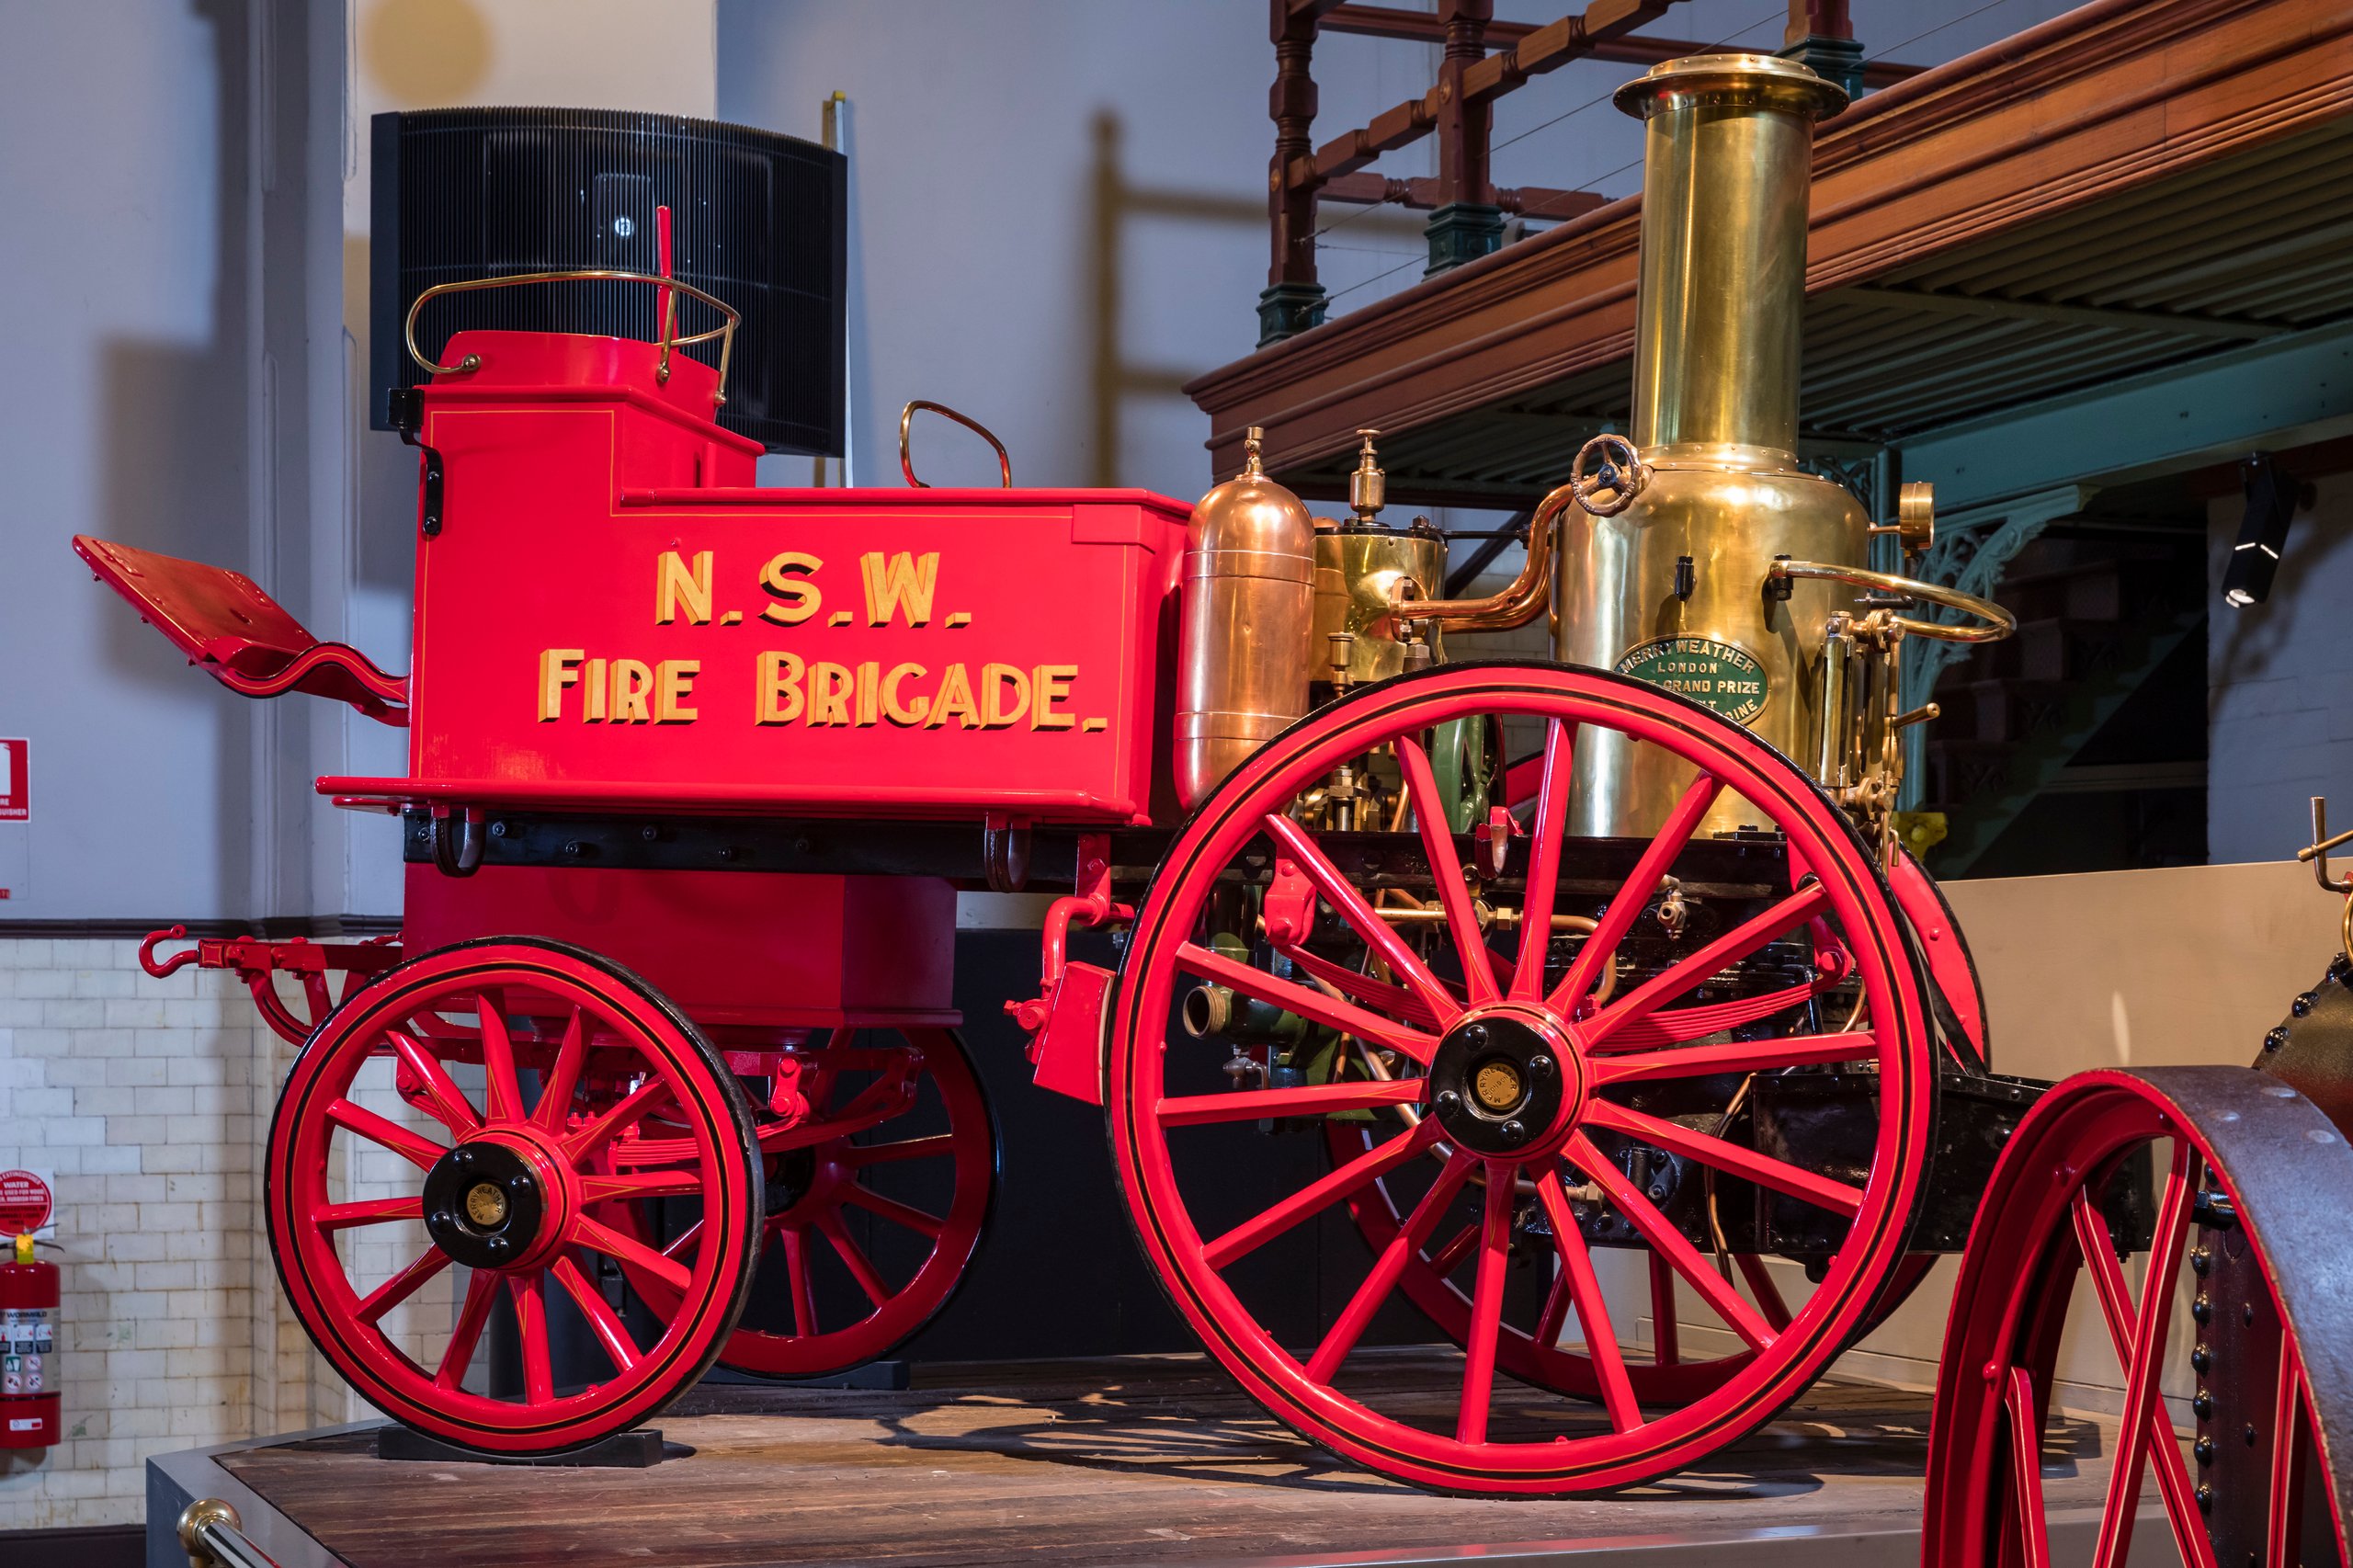 Merryweather horse-drawn steam fire engine from Broken Hill